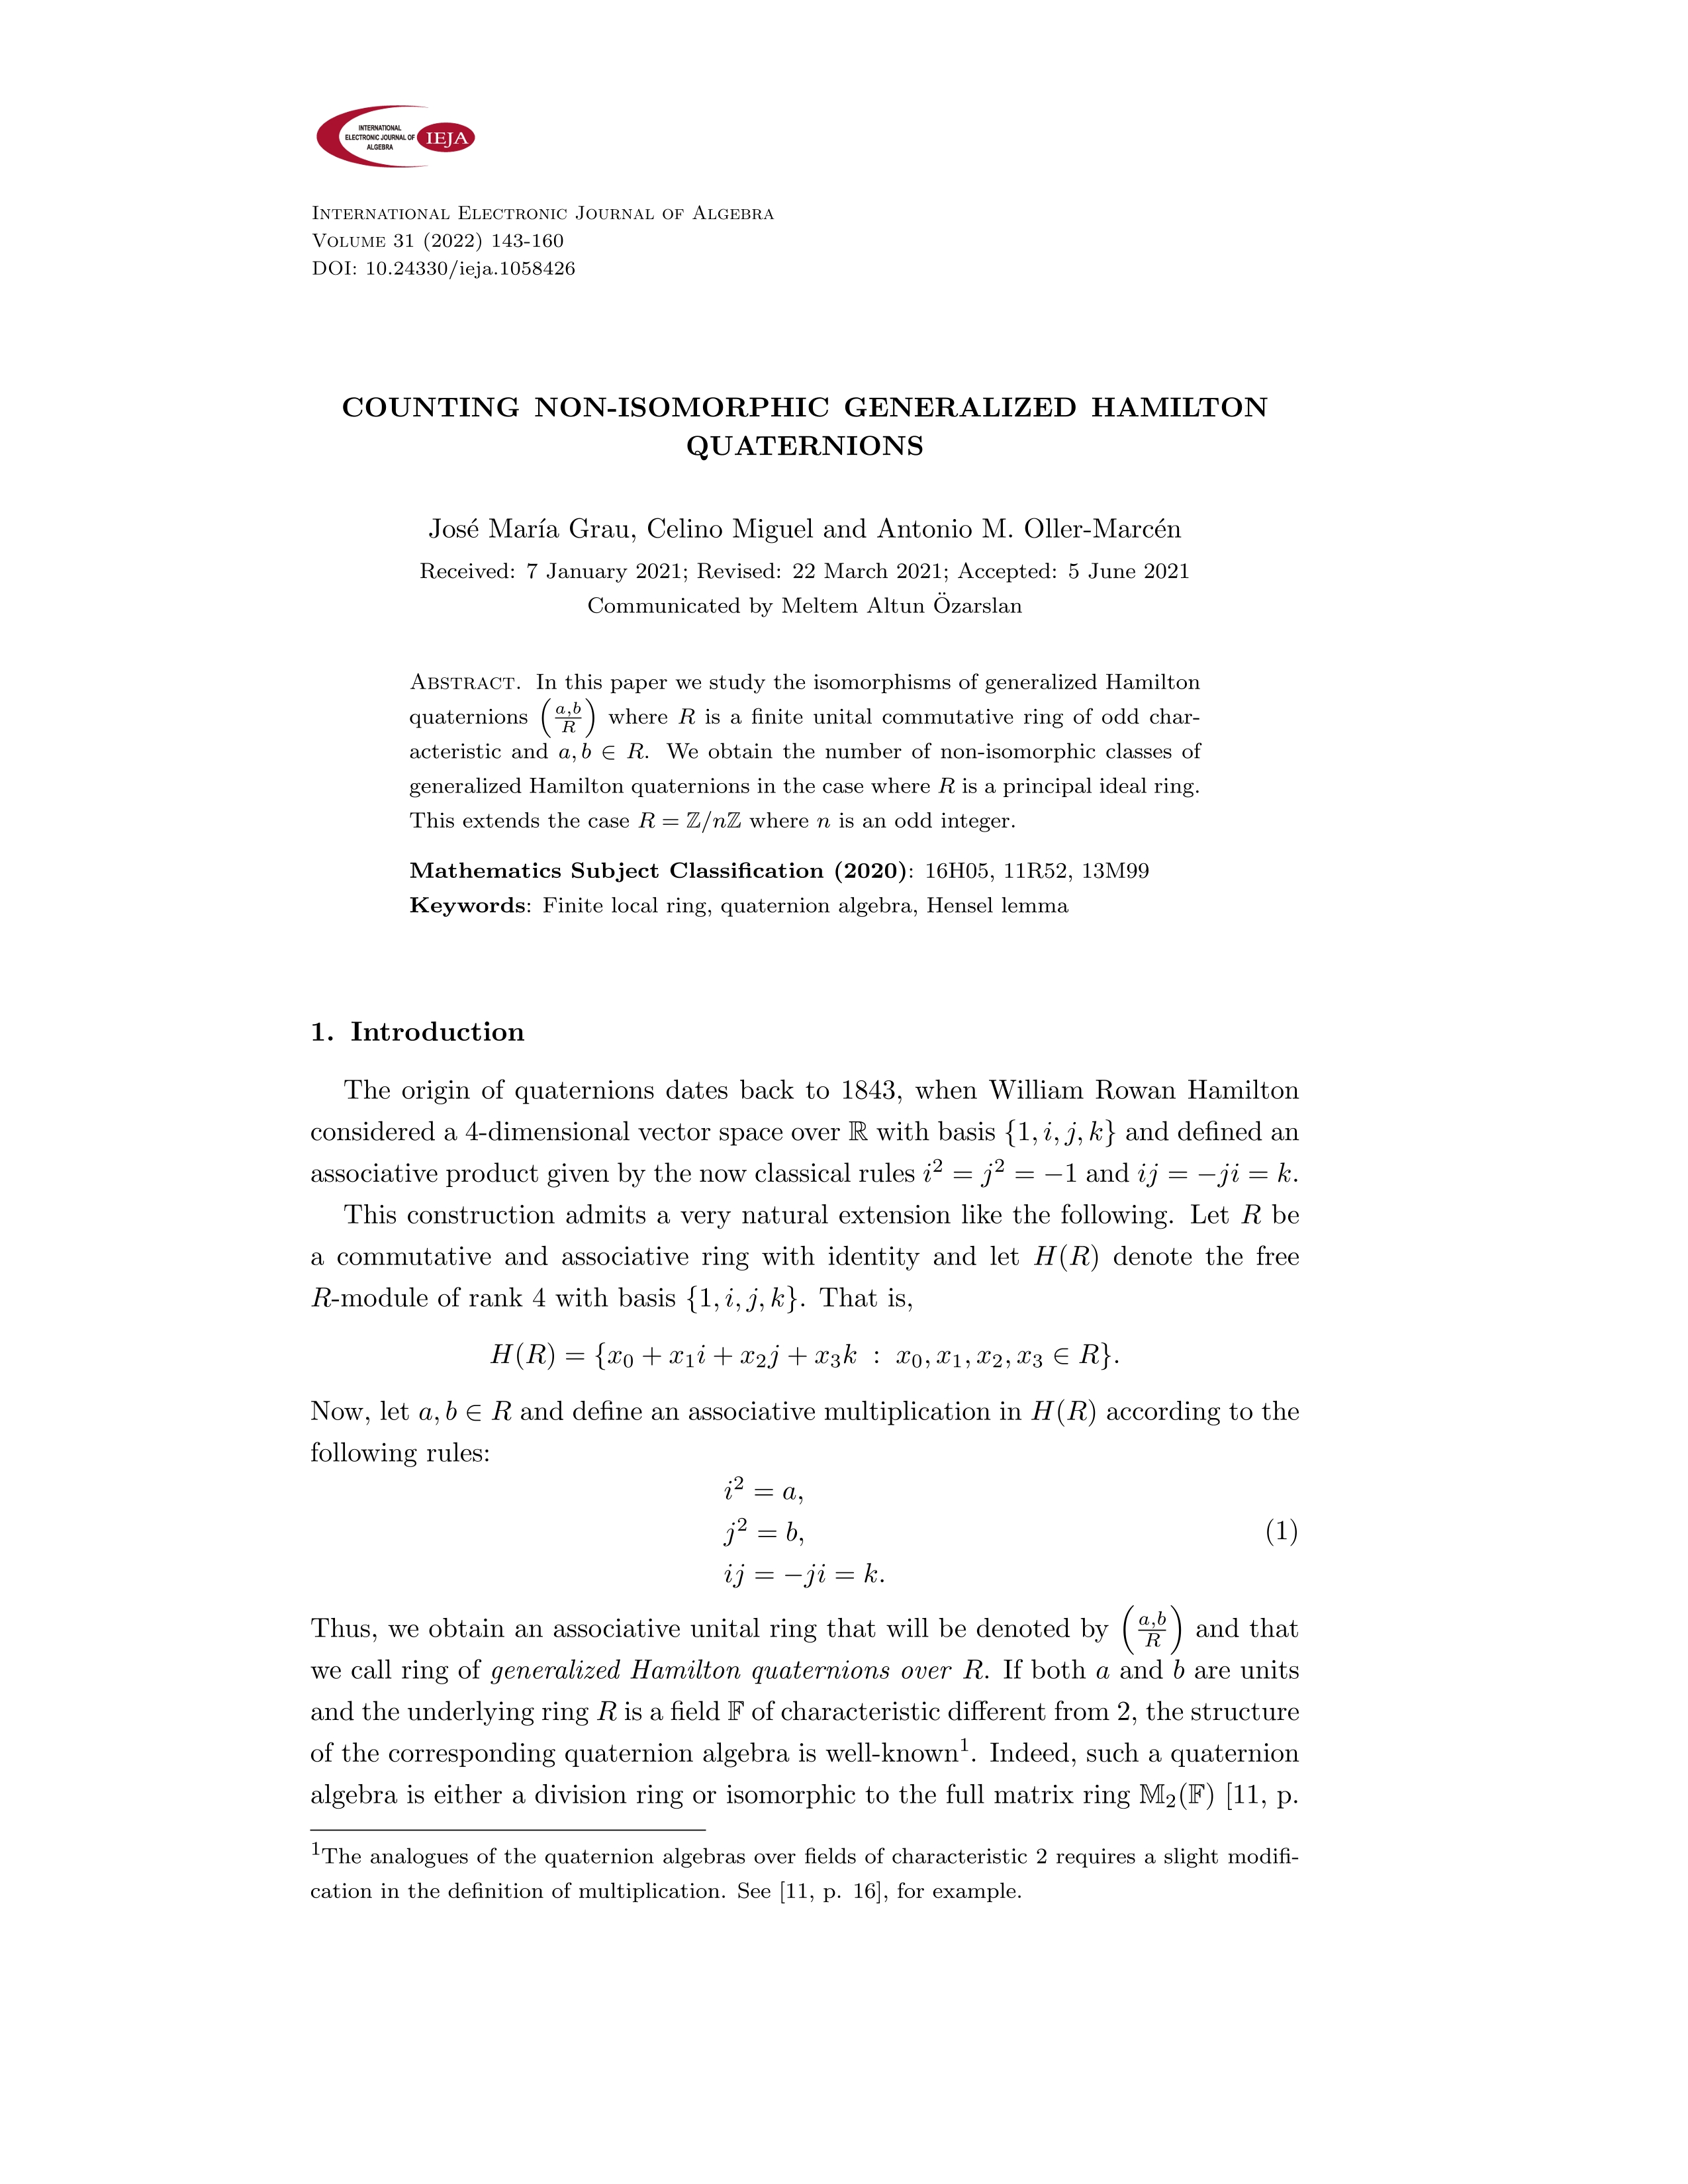 Counting non-isomorphic generalized Hamilton quaternions